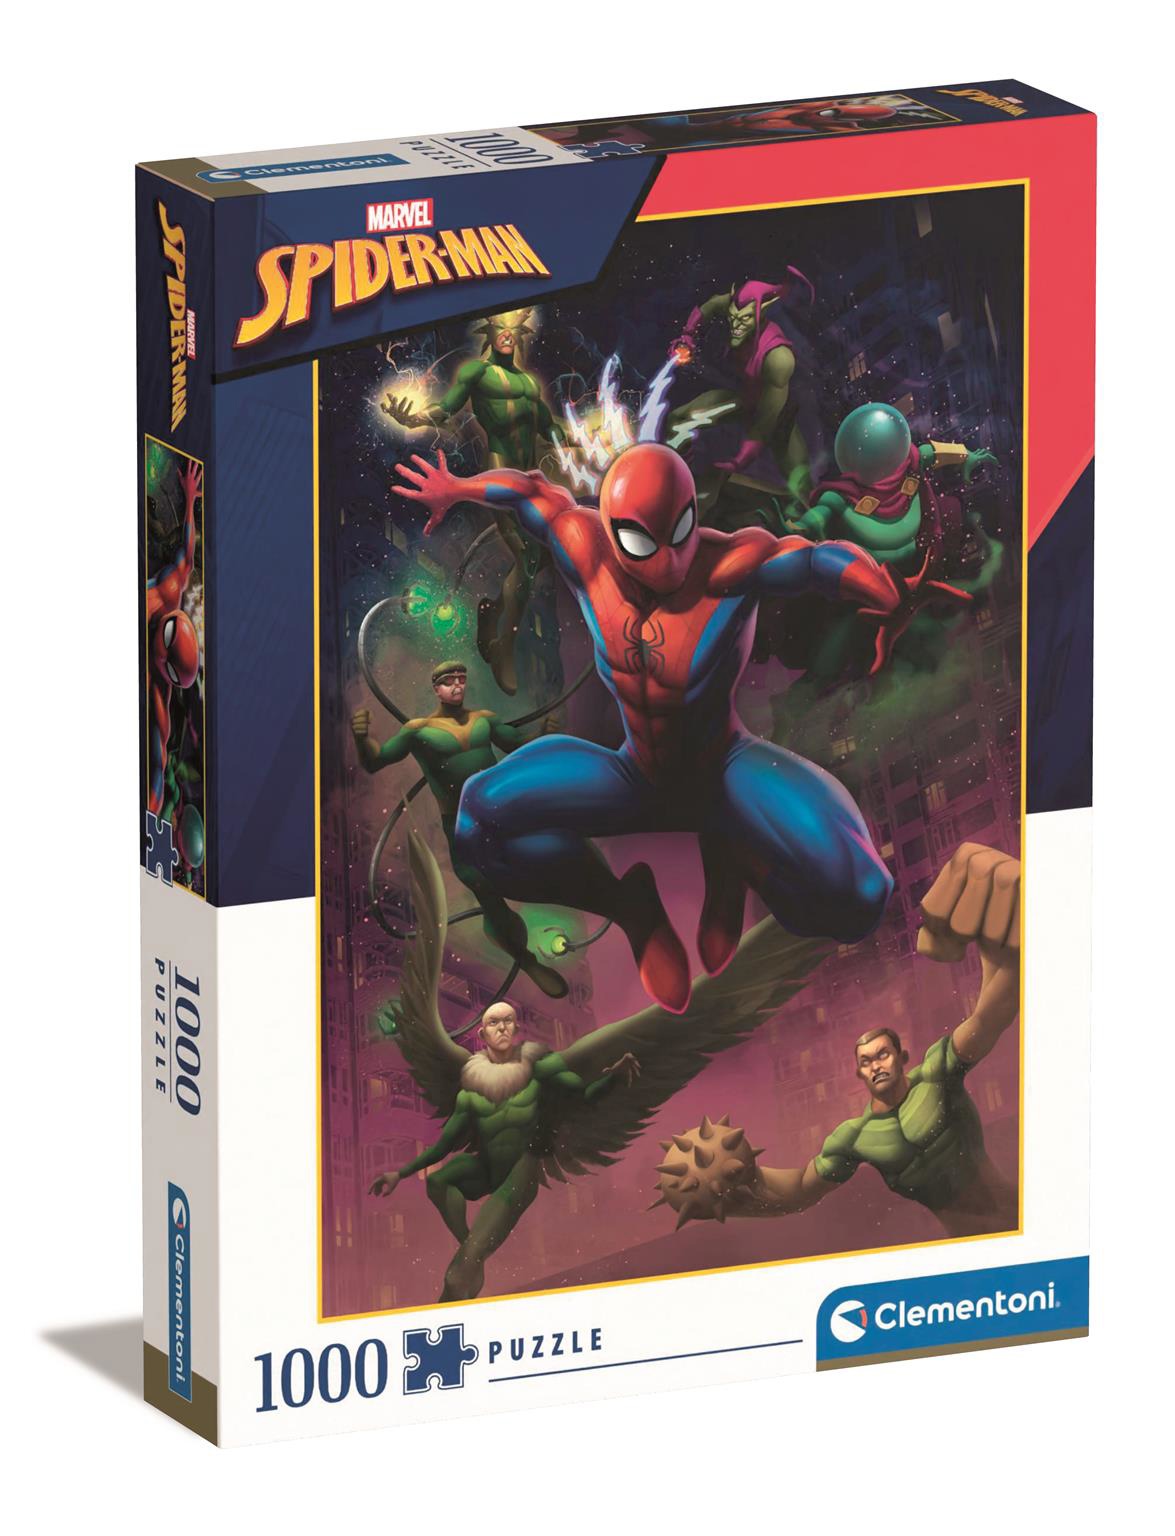 Clementoni - Puzzle Spiderman Illustrated (1000 pcs) (39742) - Leker